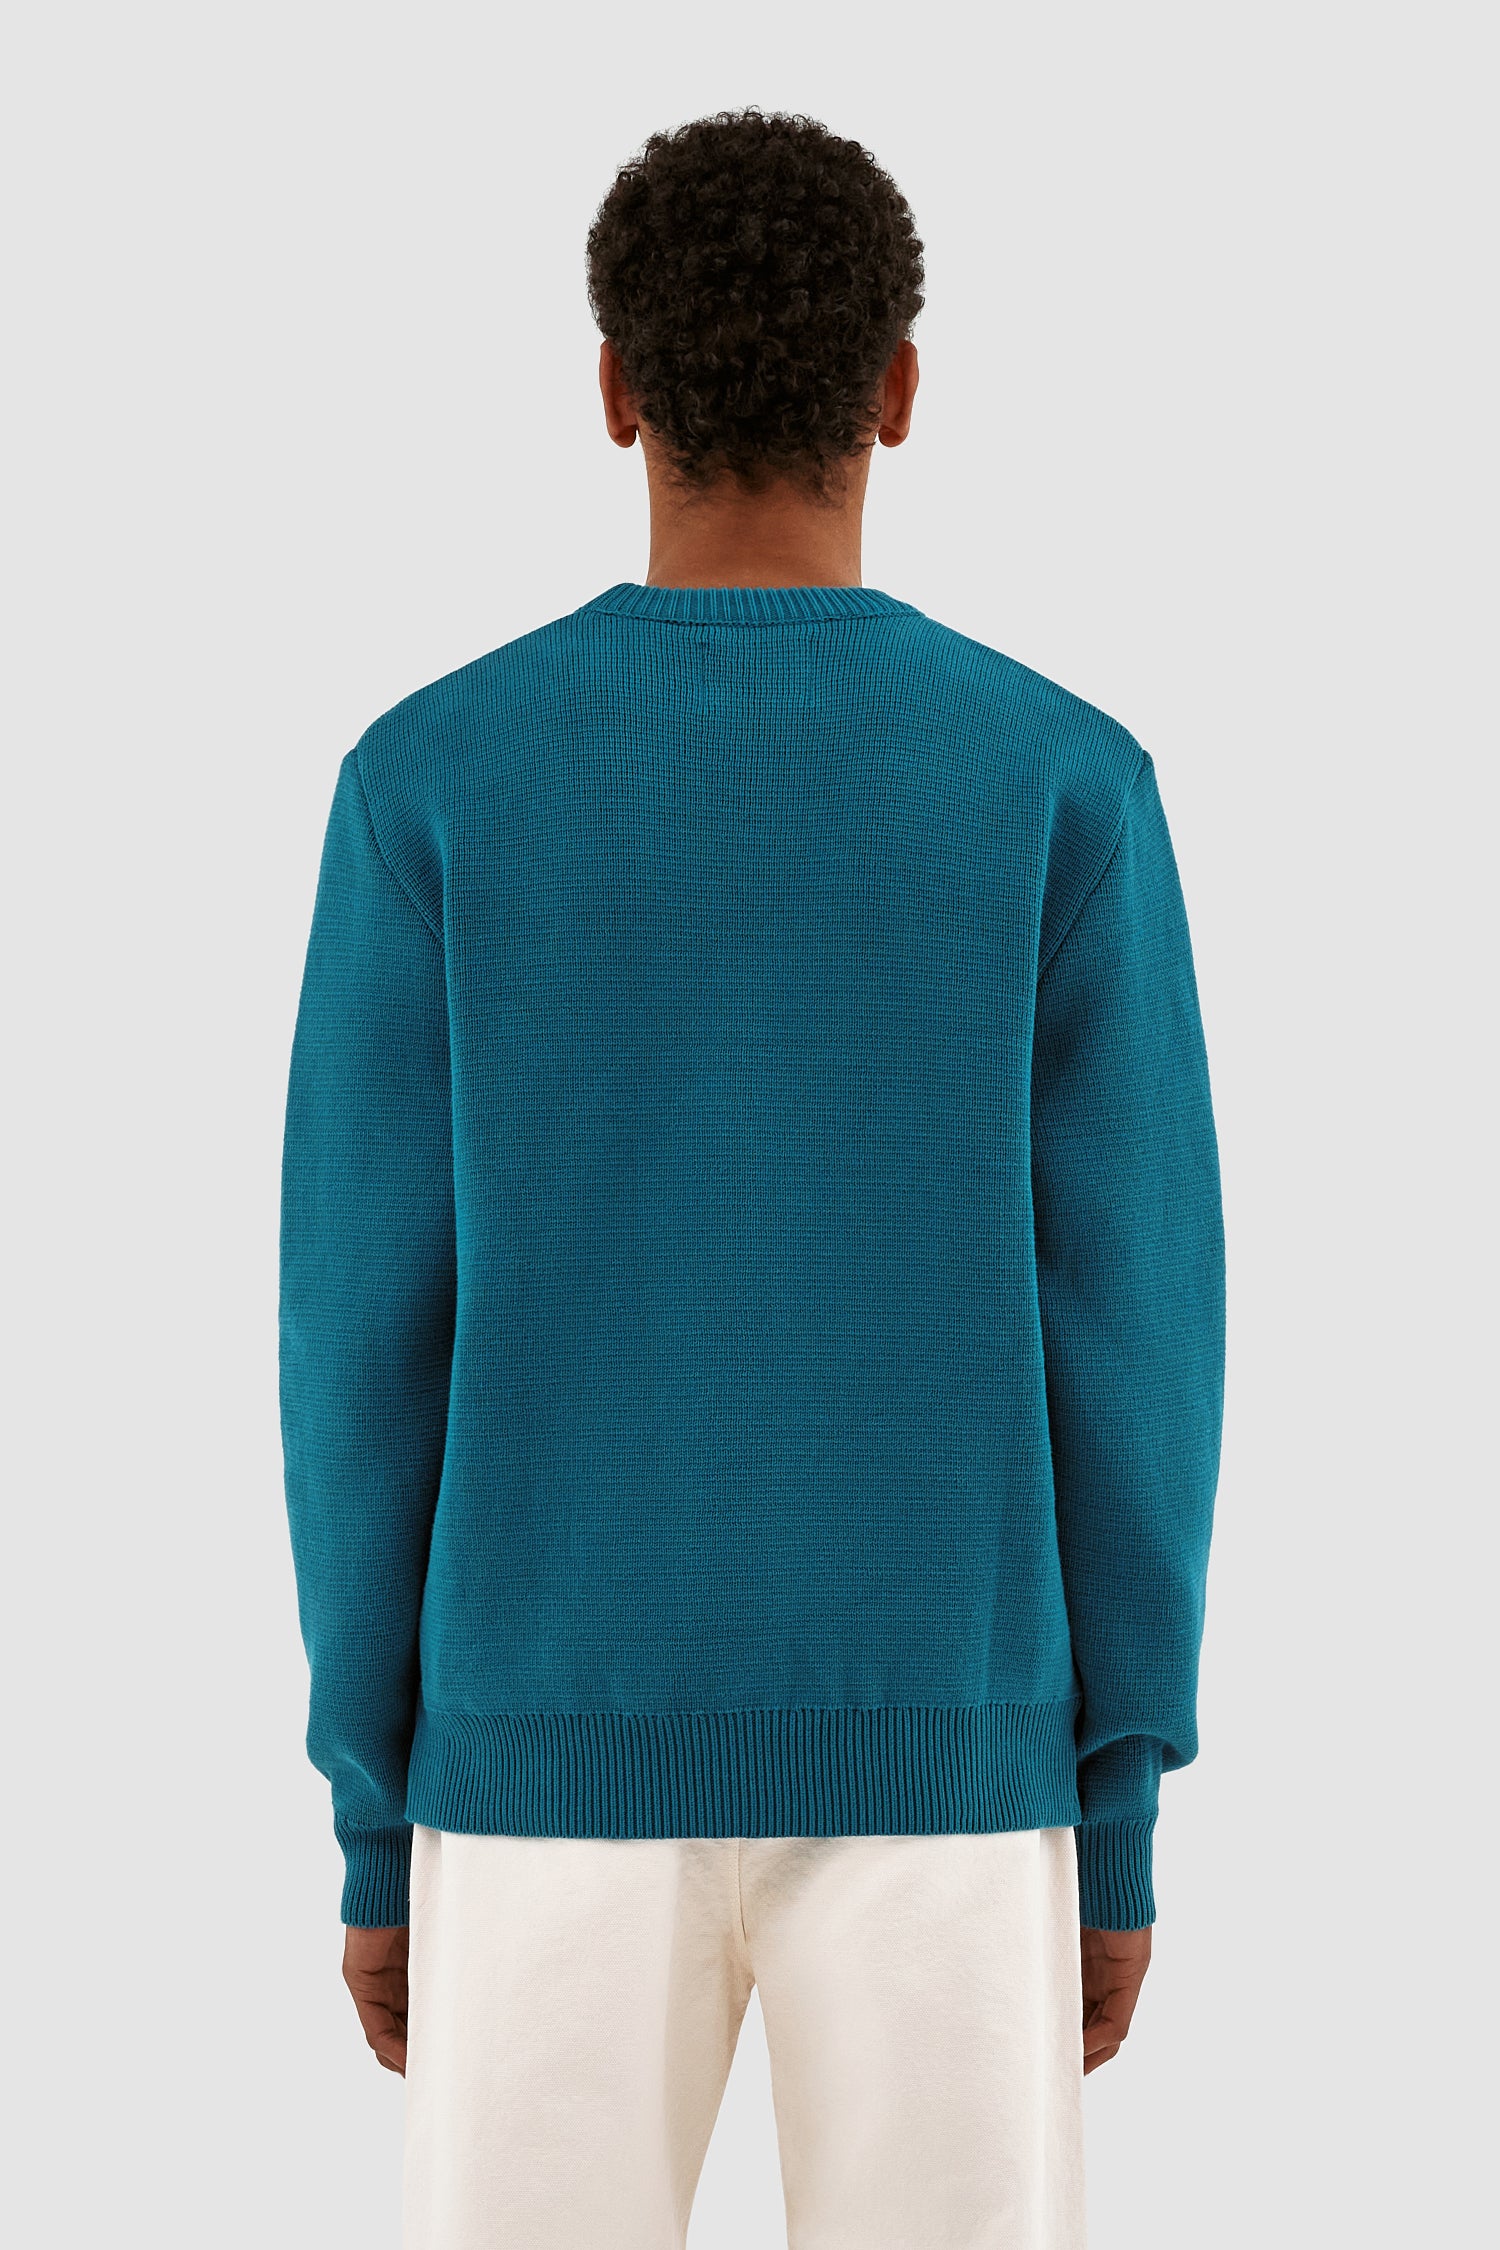 Kobe Pixel Dancers Sweater - Petrol Blue